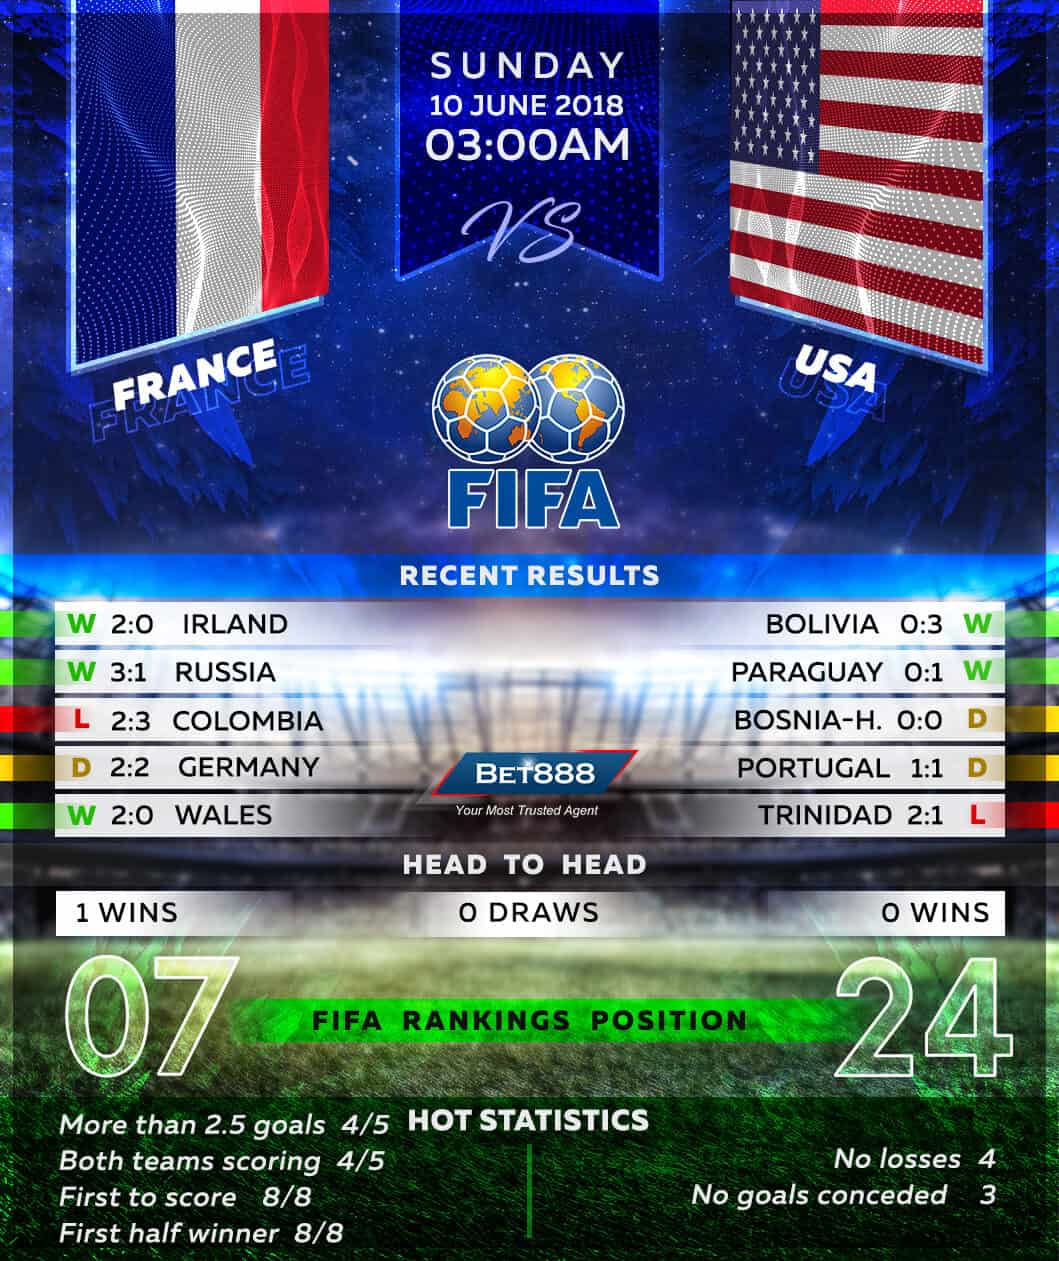 France vs USA 10/06/18